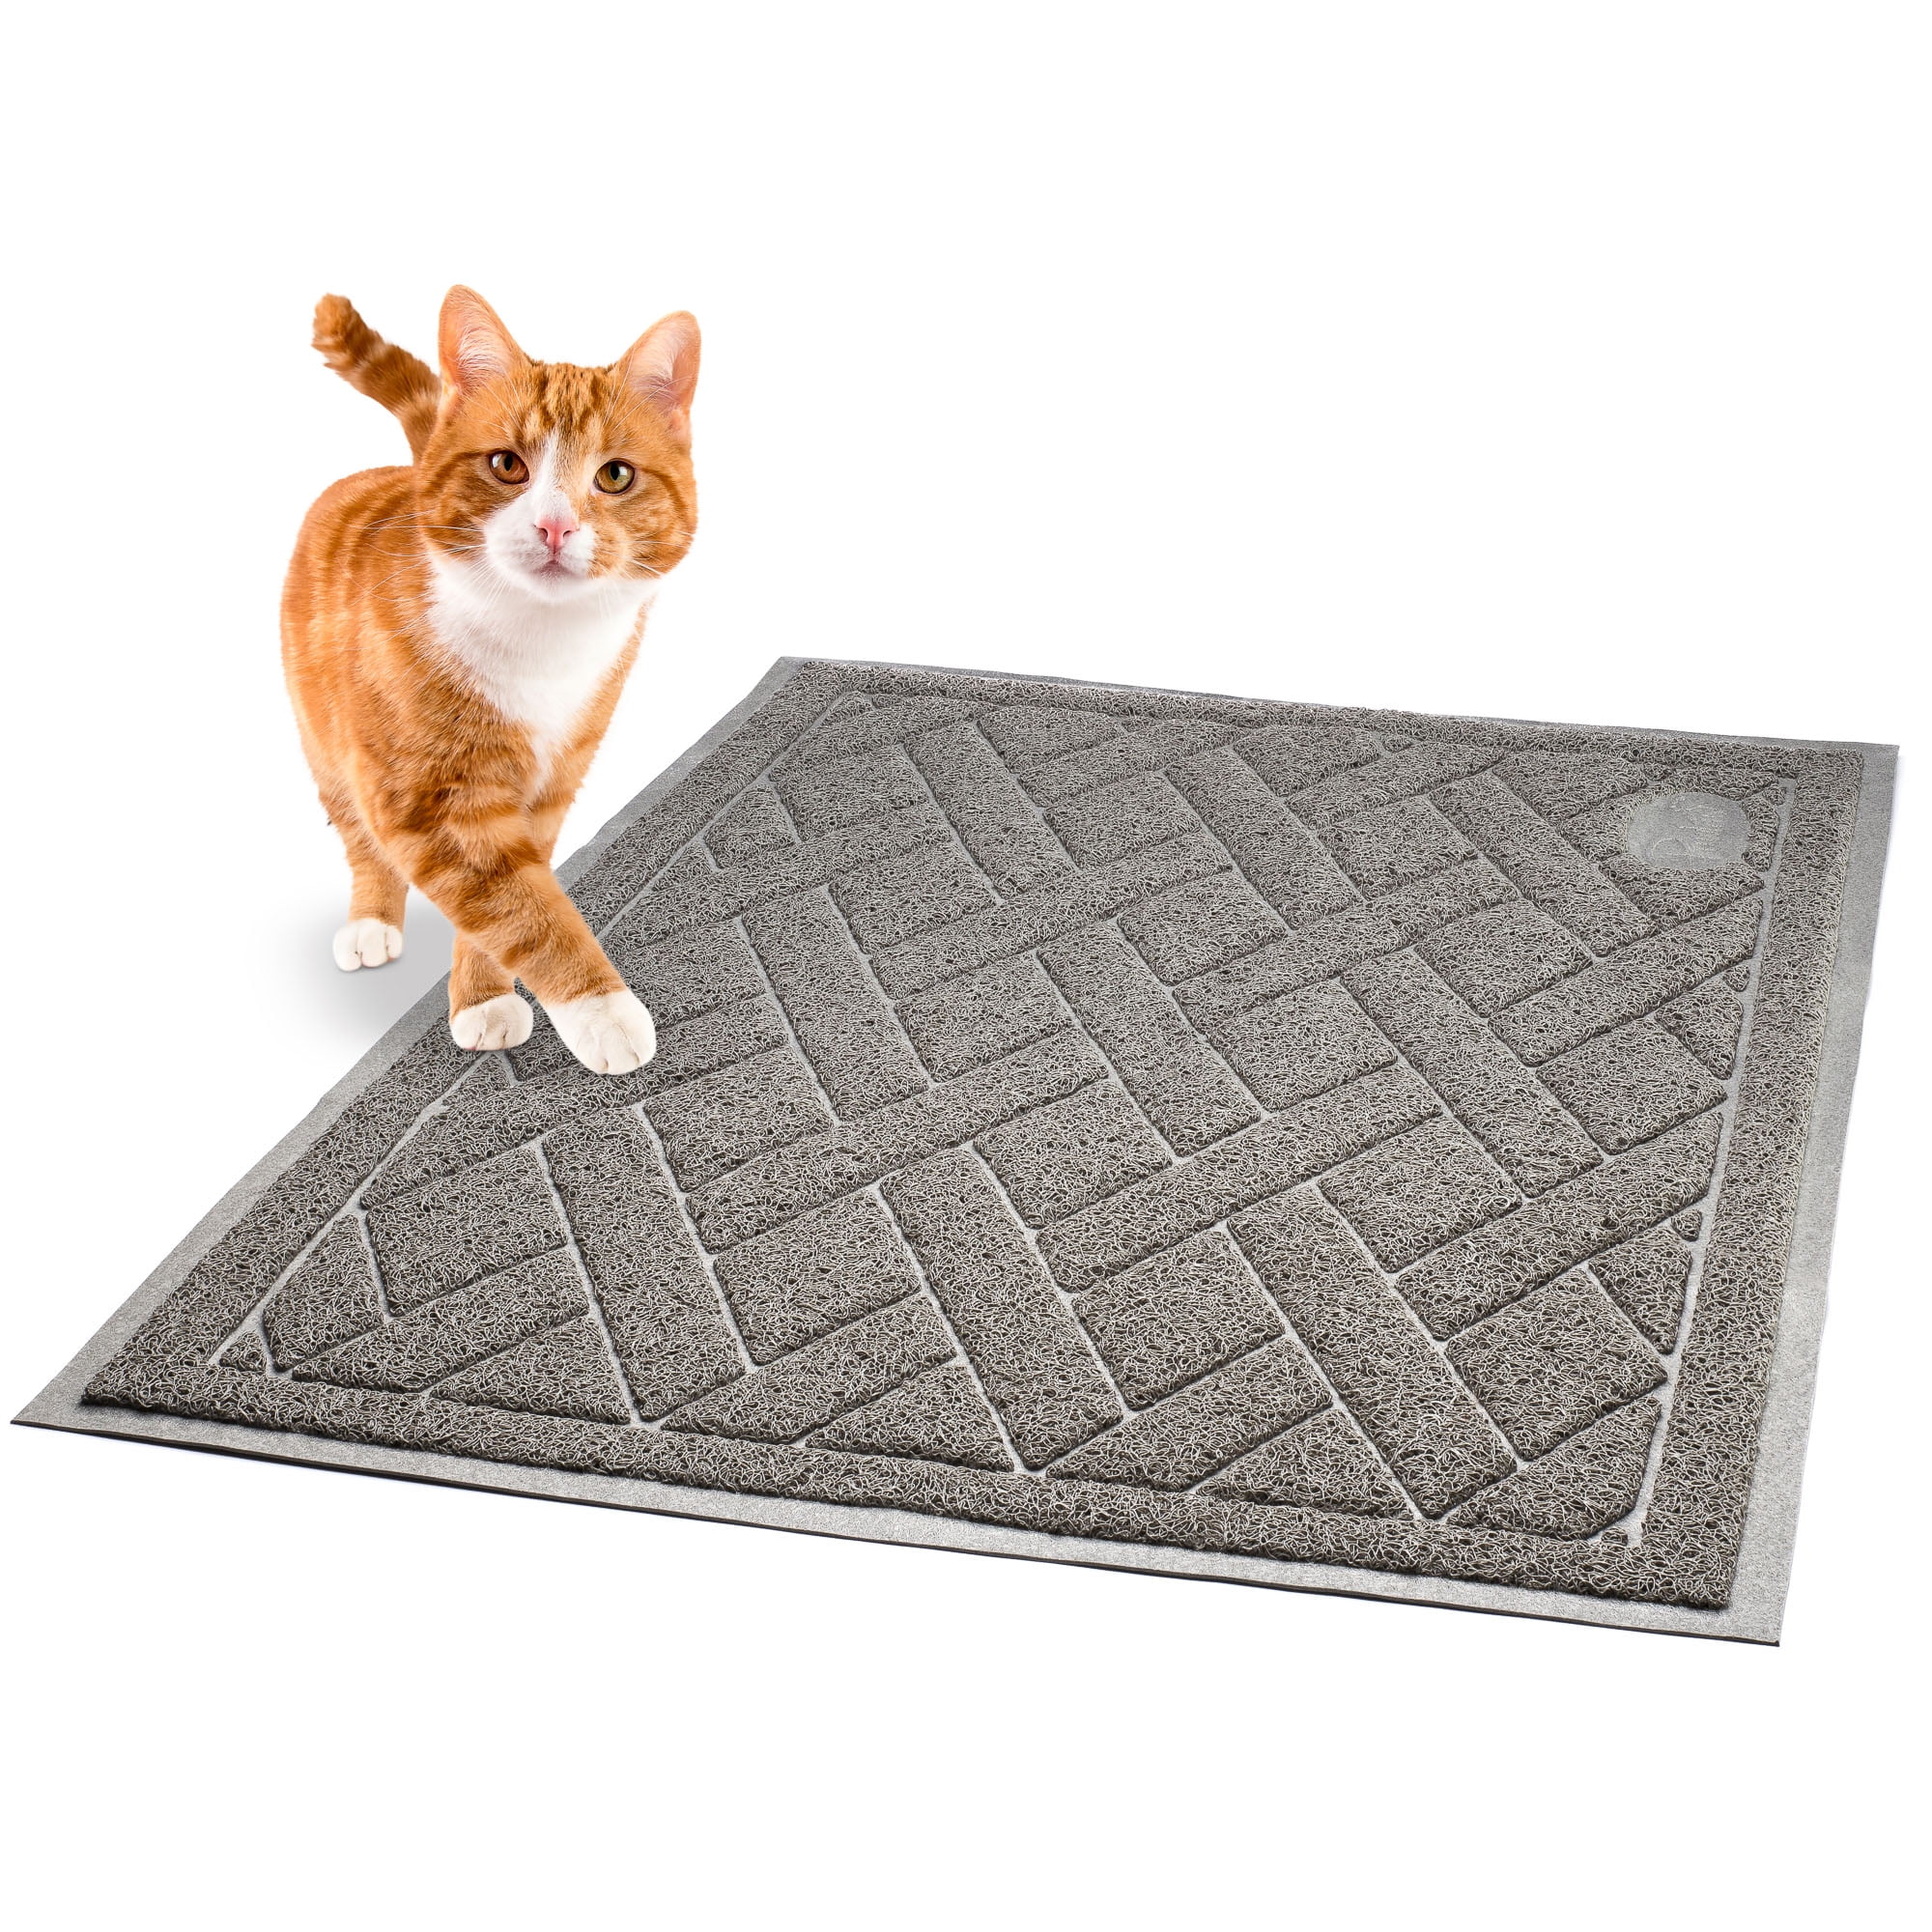 Pawkin, Cat Litter Mat With Litter Lock Mesh Design, Extra Large, Gray 